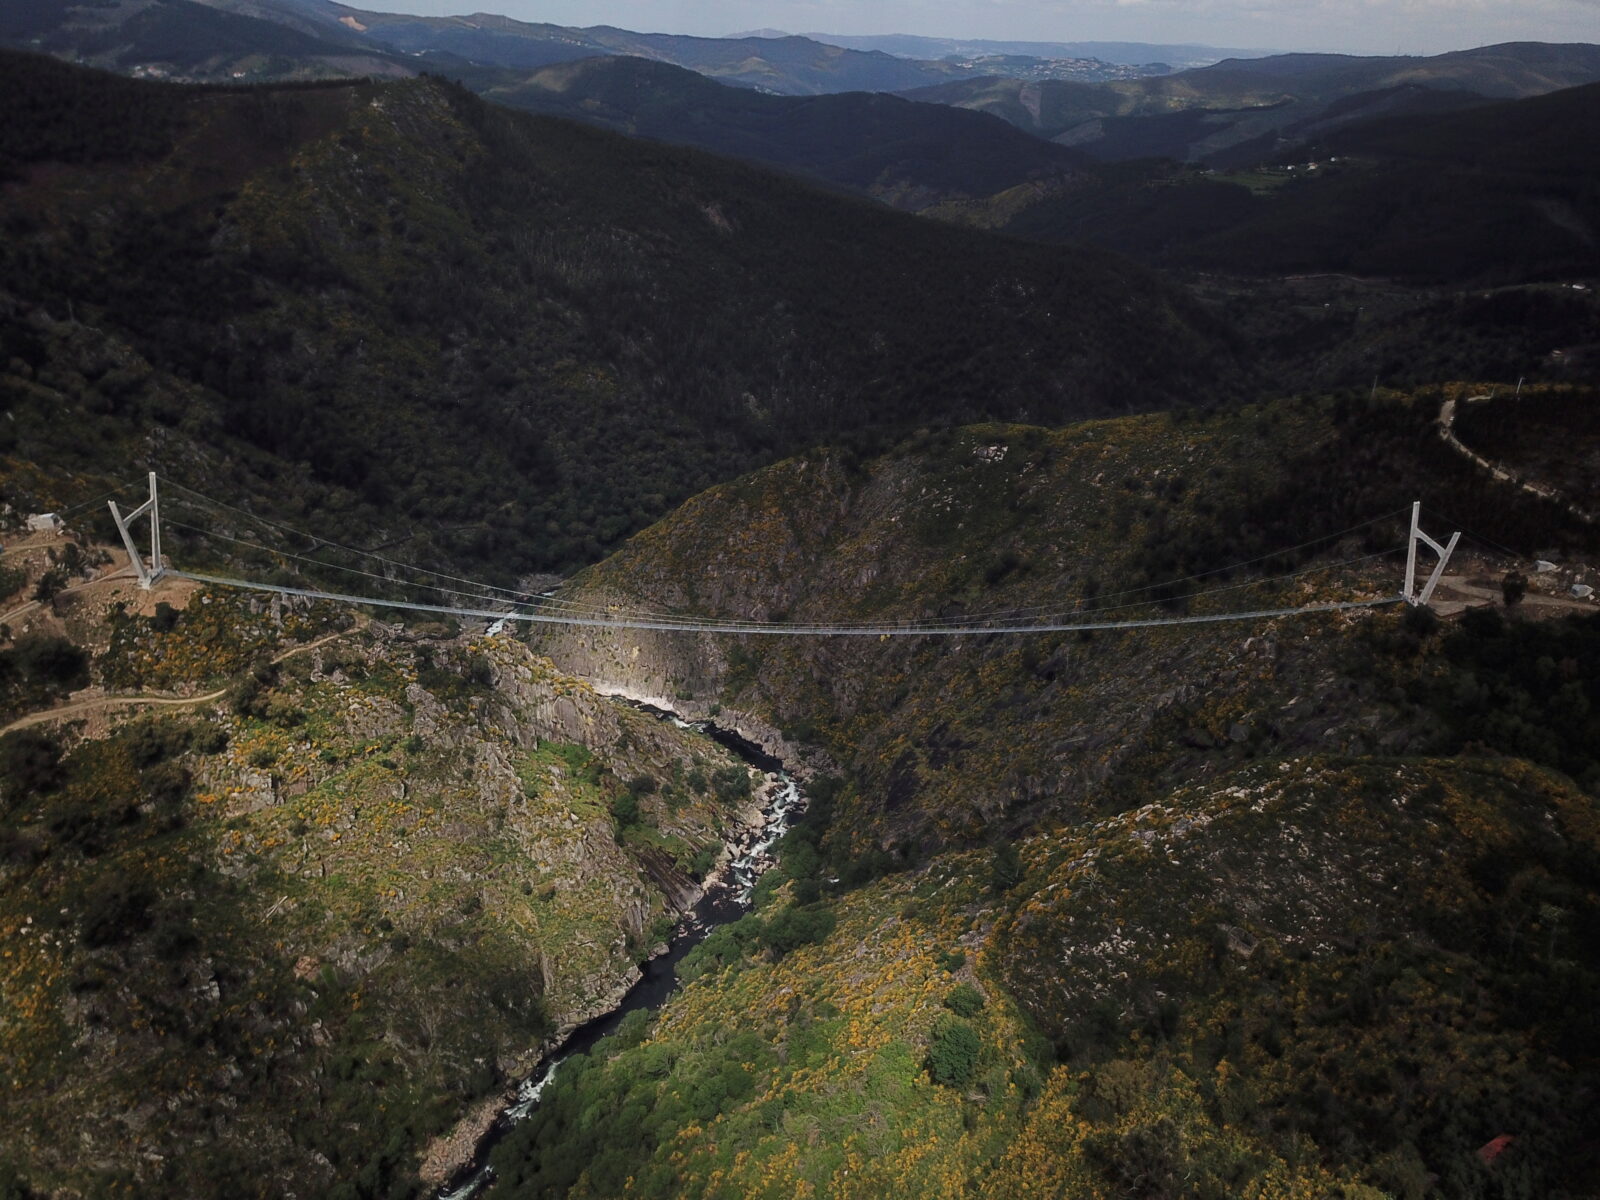 A general view of the world's longest pedestrian suspension bridge '516 Arouca' in Arouca